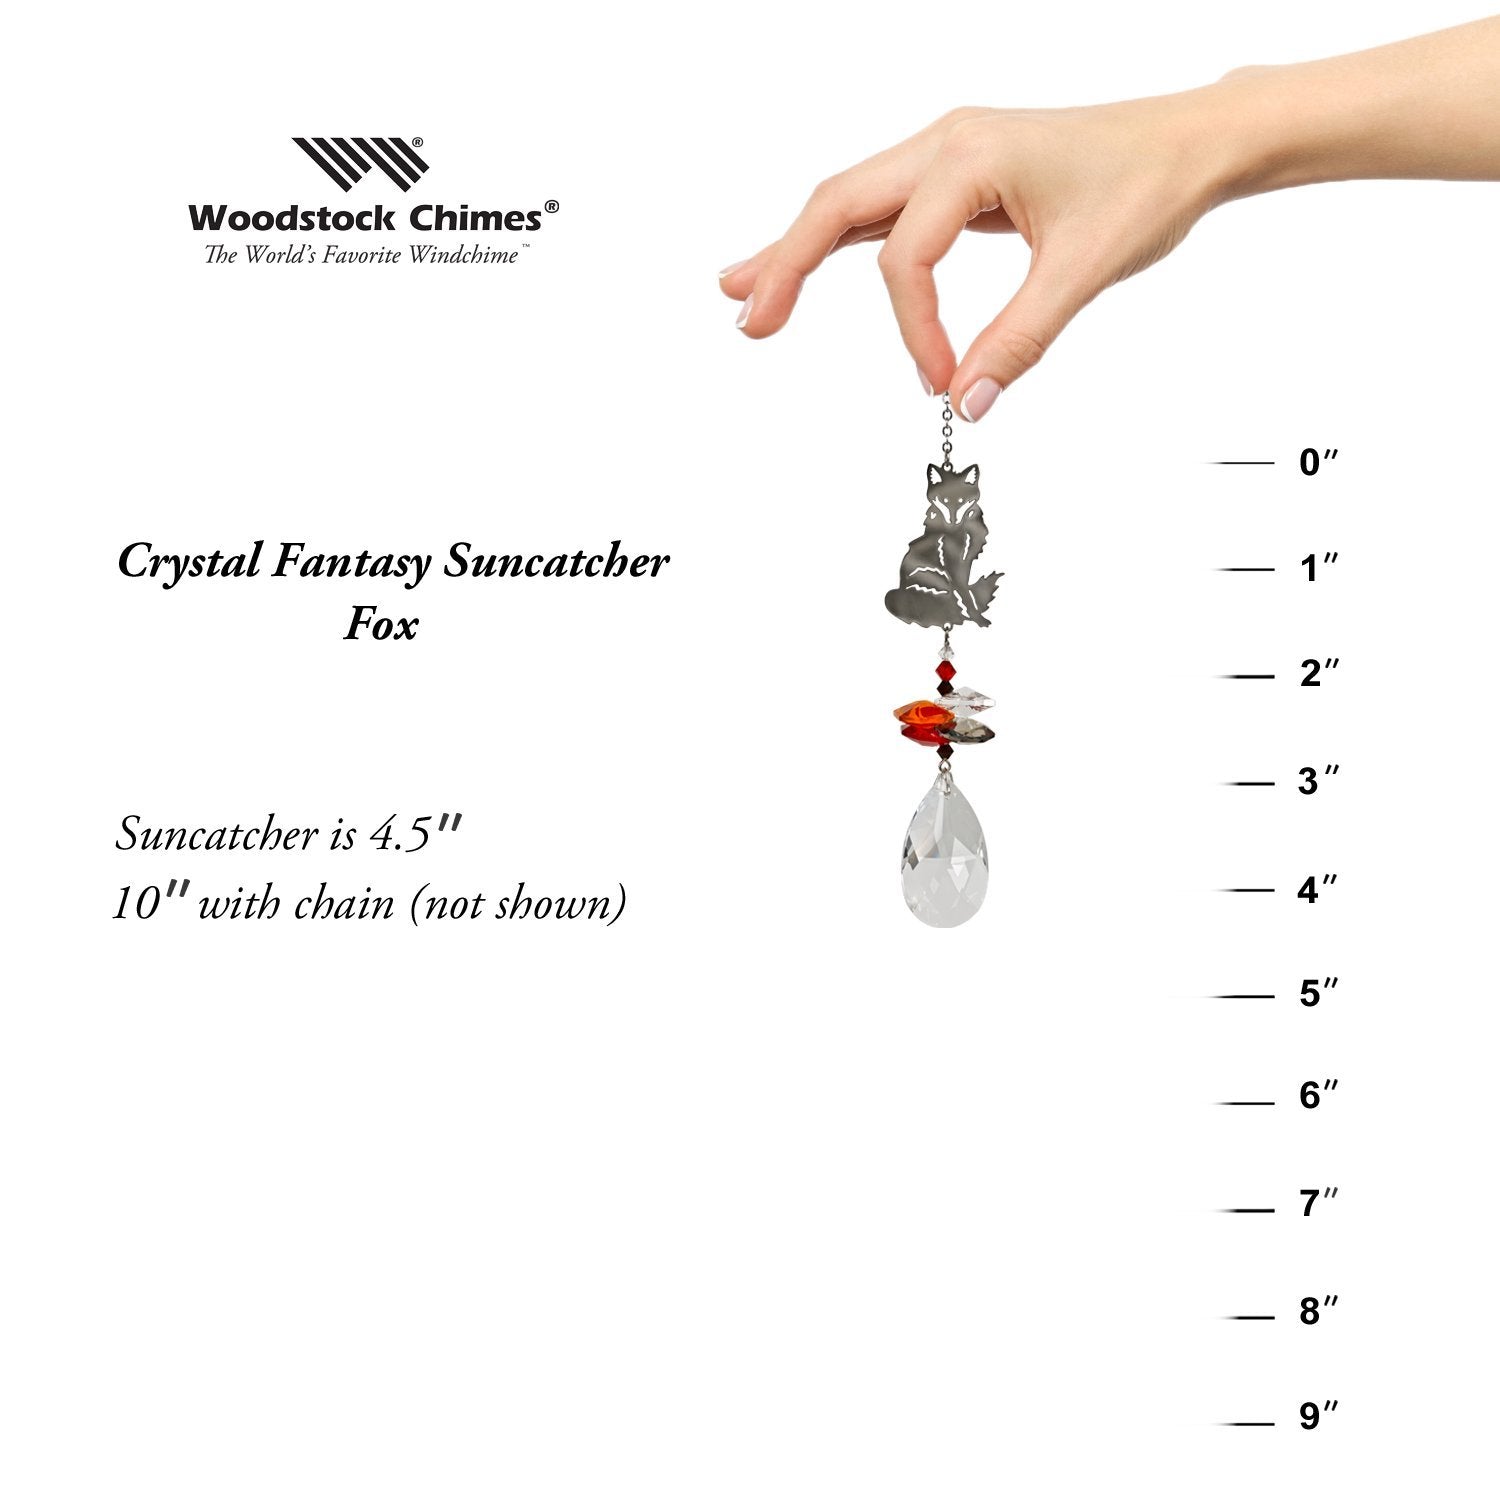 Crystal Fantasy Suncatcher - Flower of Life proportion image